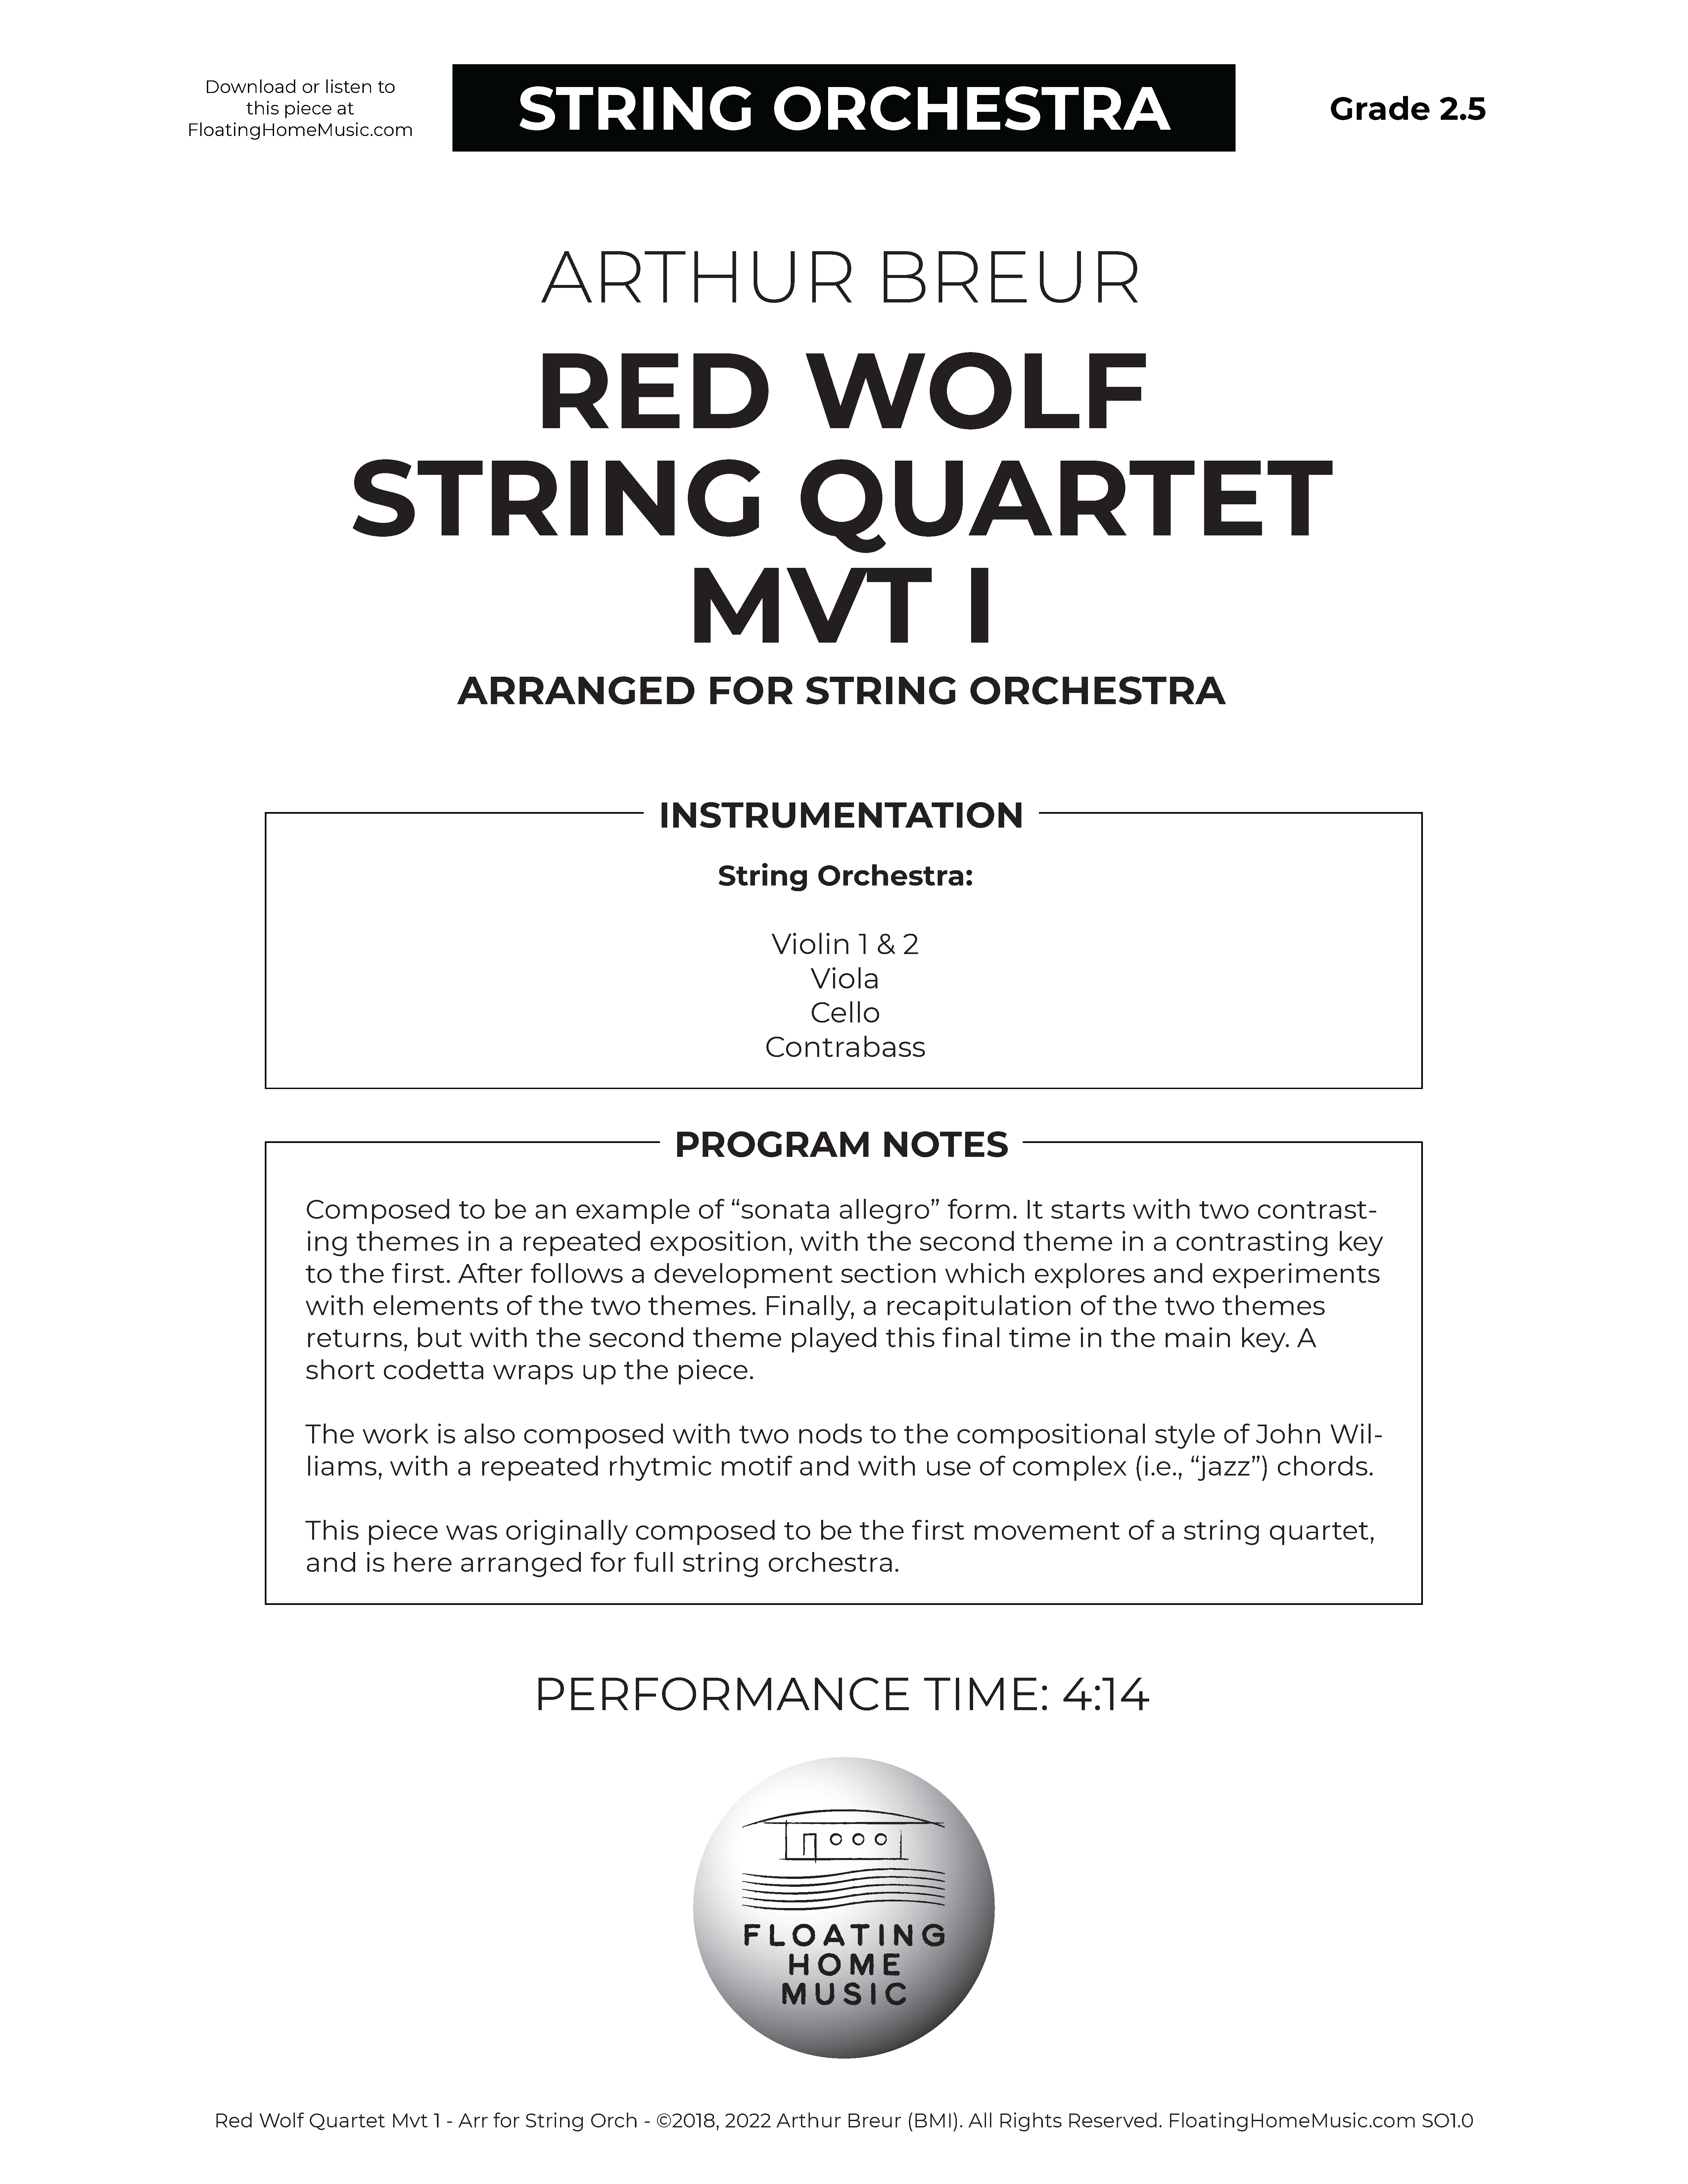 Arthur Breur composer, Red Wolf Quartet arranged for String Orchestra